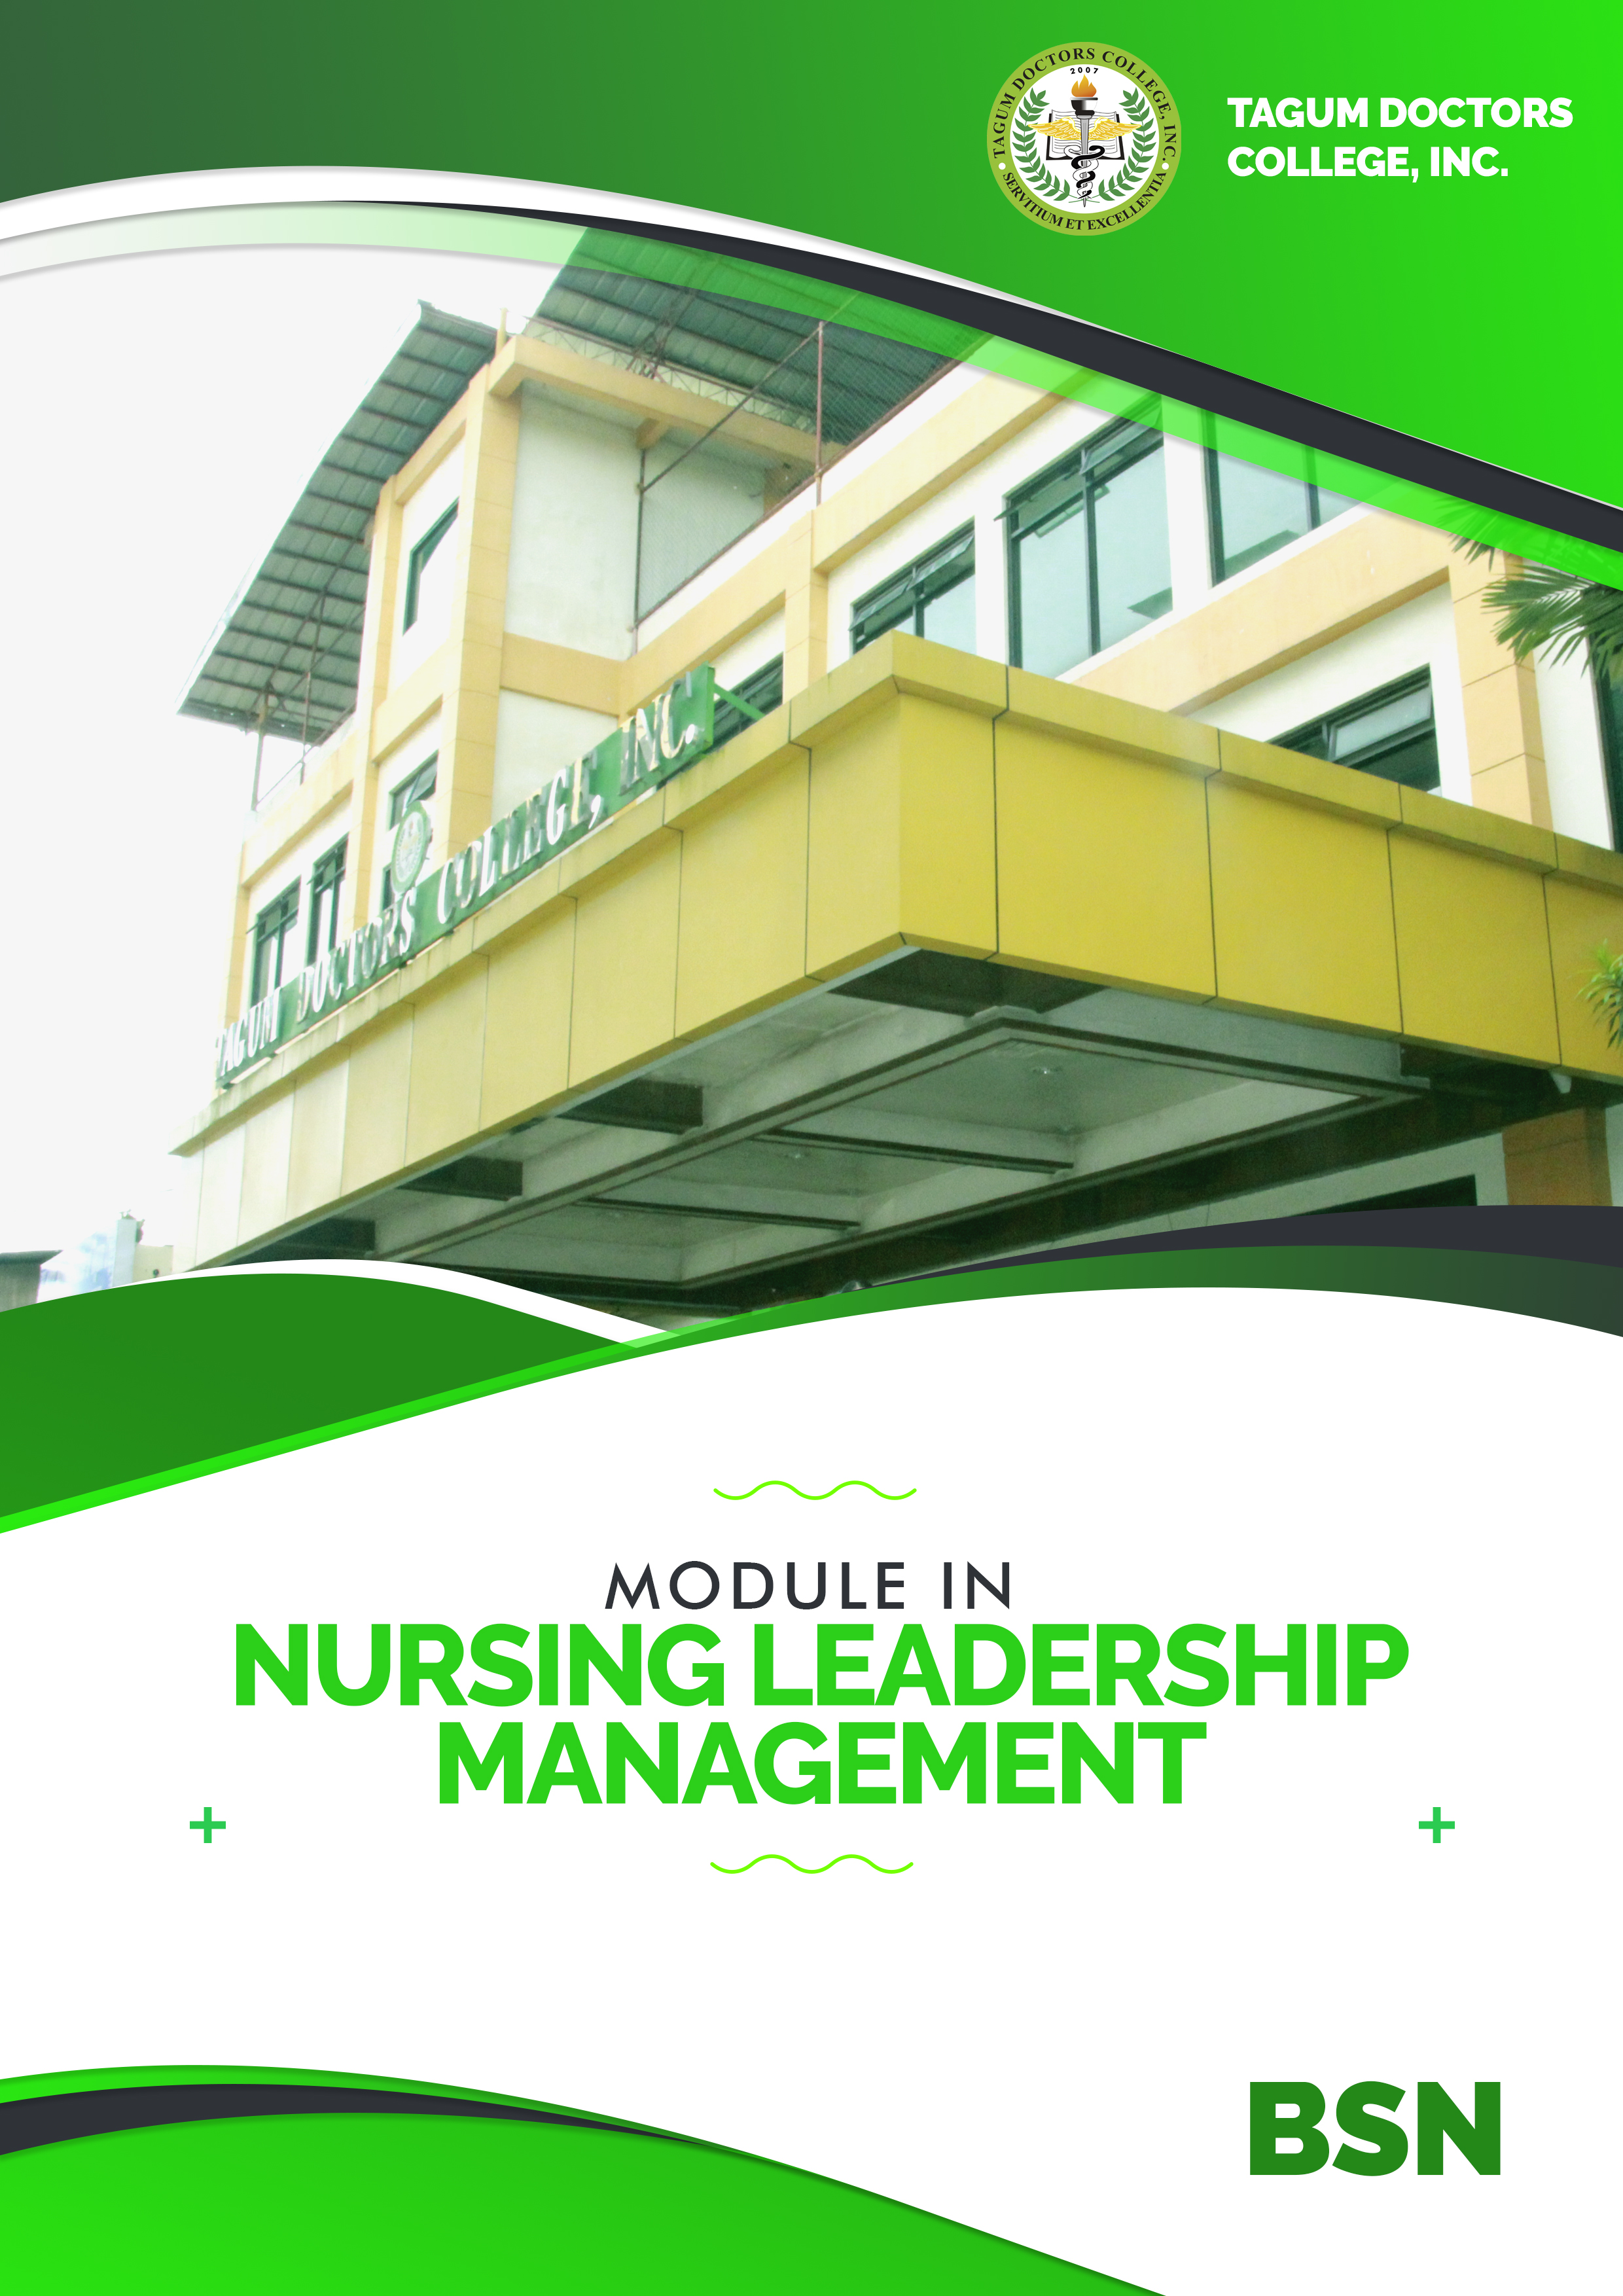 Nursing Leadership and Management - BSN 4B